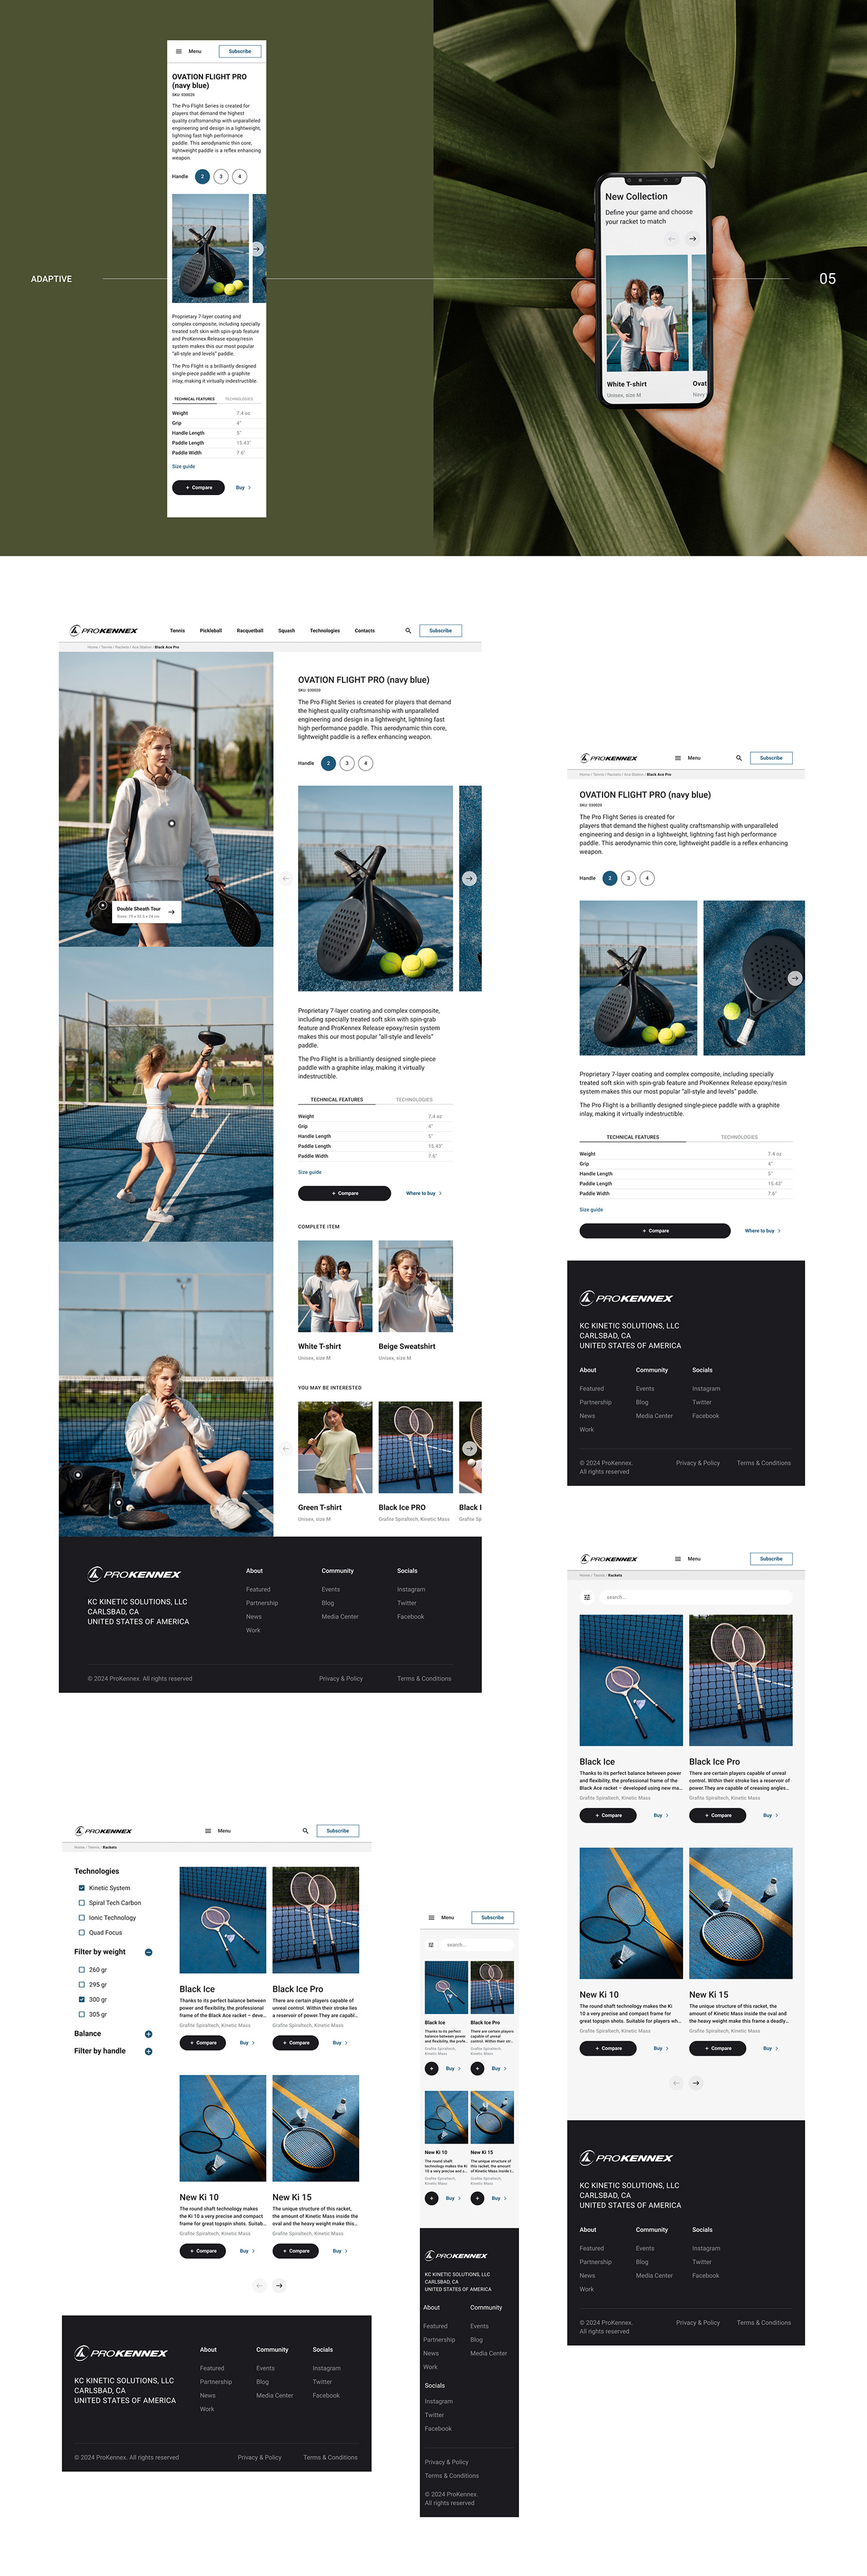 ui design UX design фигма sport design Web Design  tennis Mobile app user interface Website